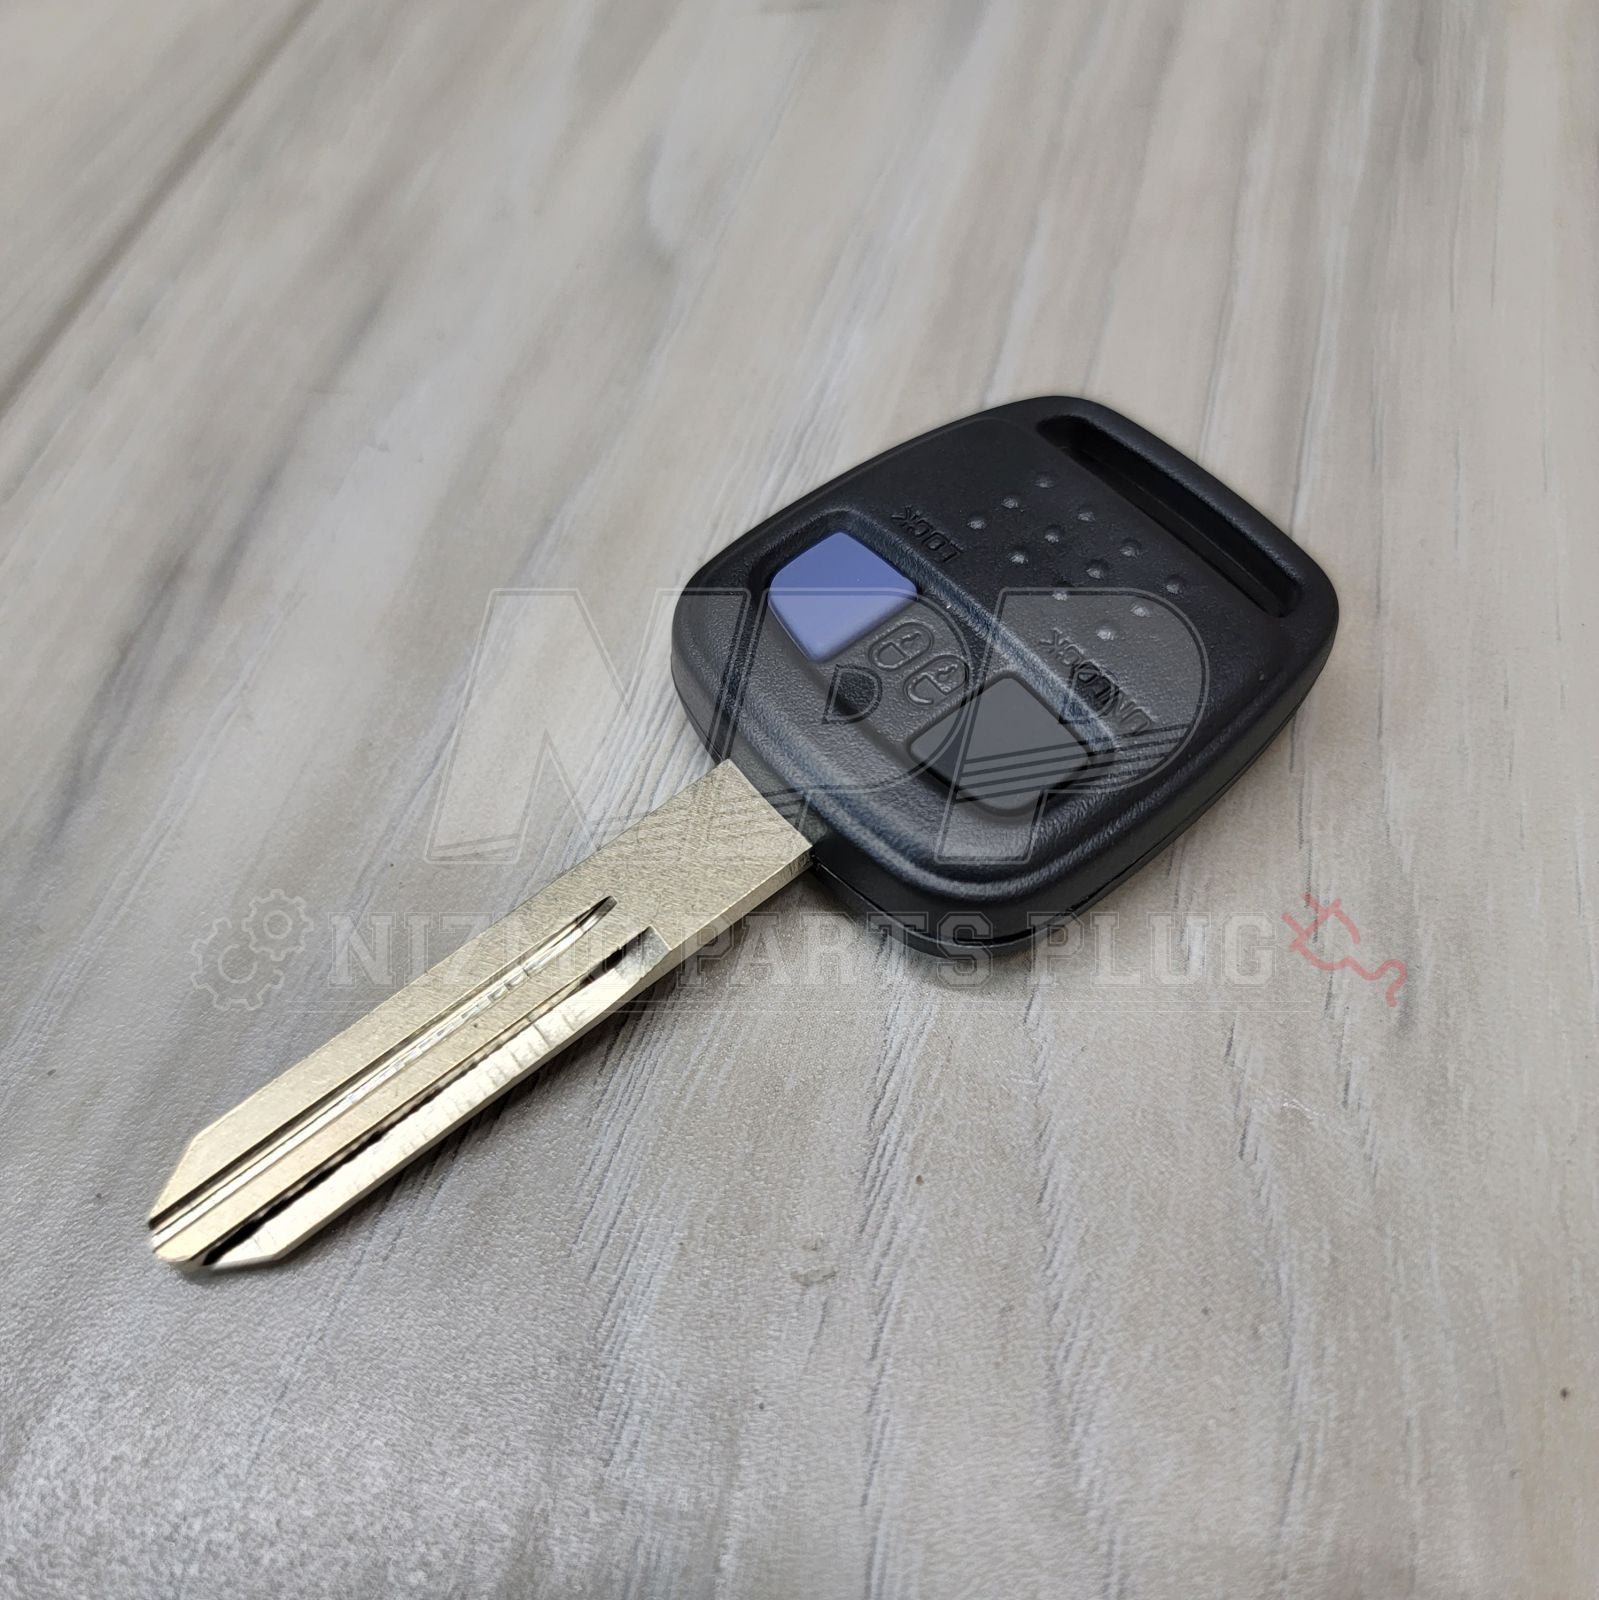 S15 Silvia/R34 Skyline Remote Entry Master Key With Keyless Entry